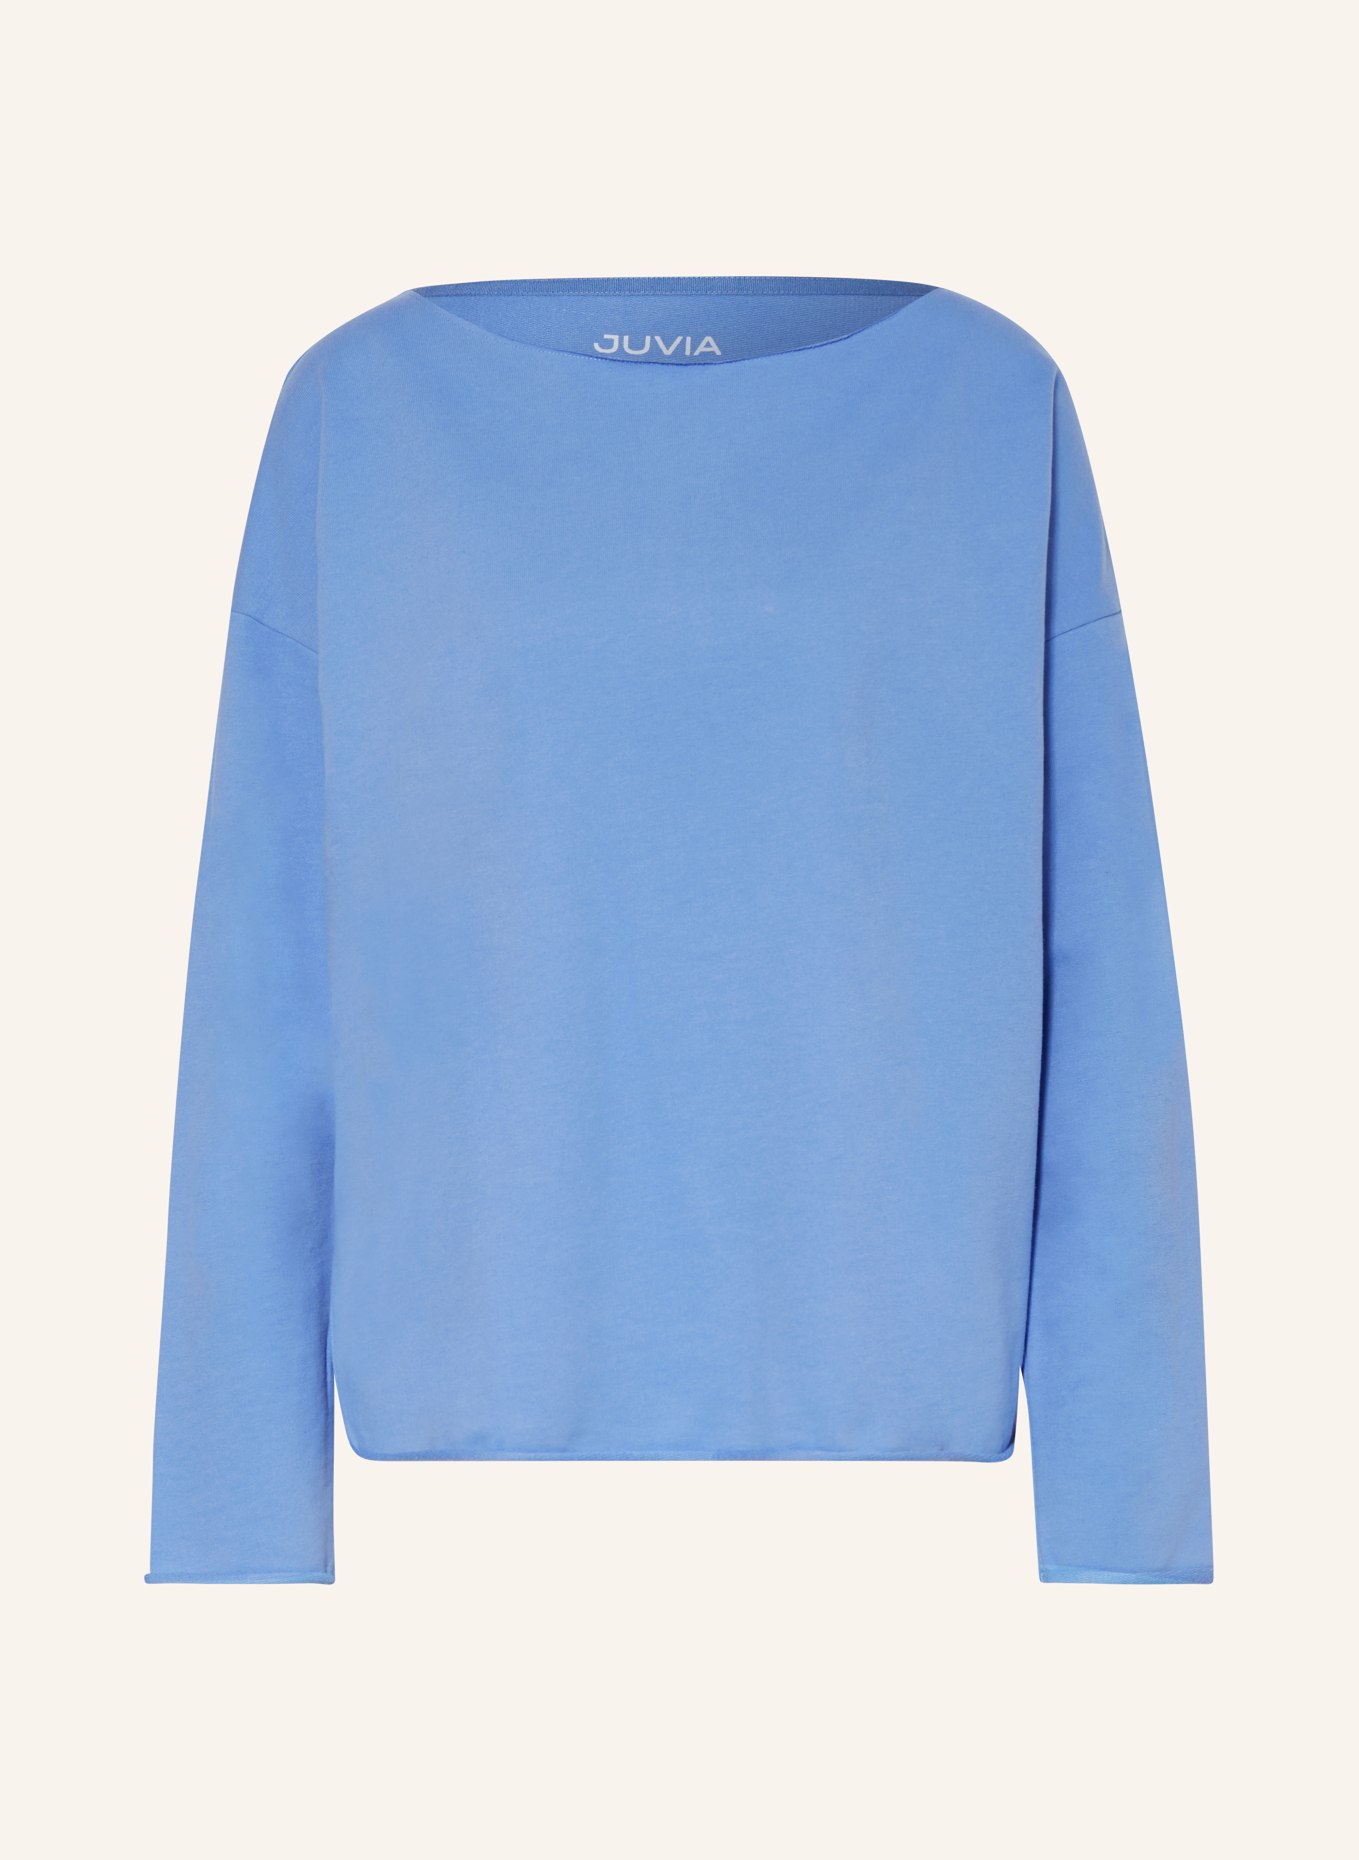 Juvia Sweatshirt SUMMER, Farbe: BLAU (Bild 1)